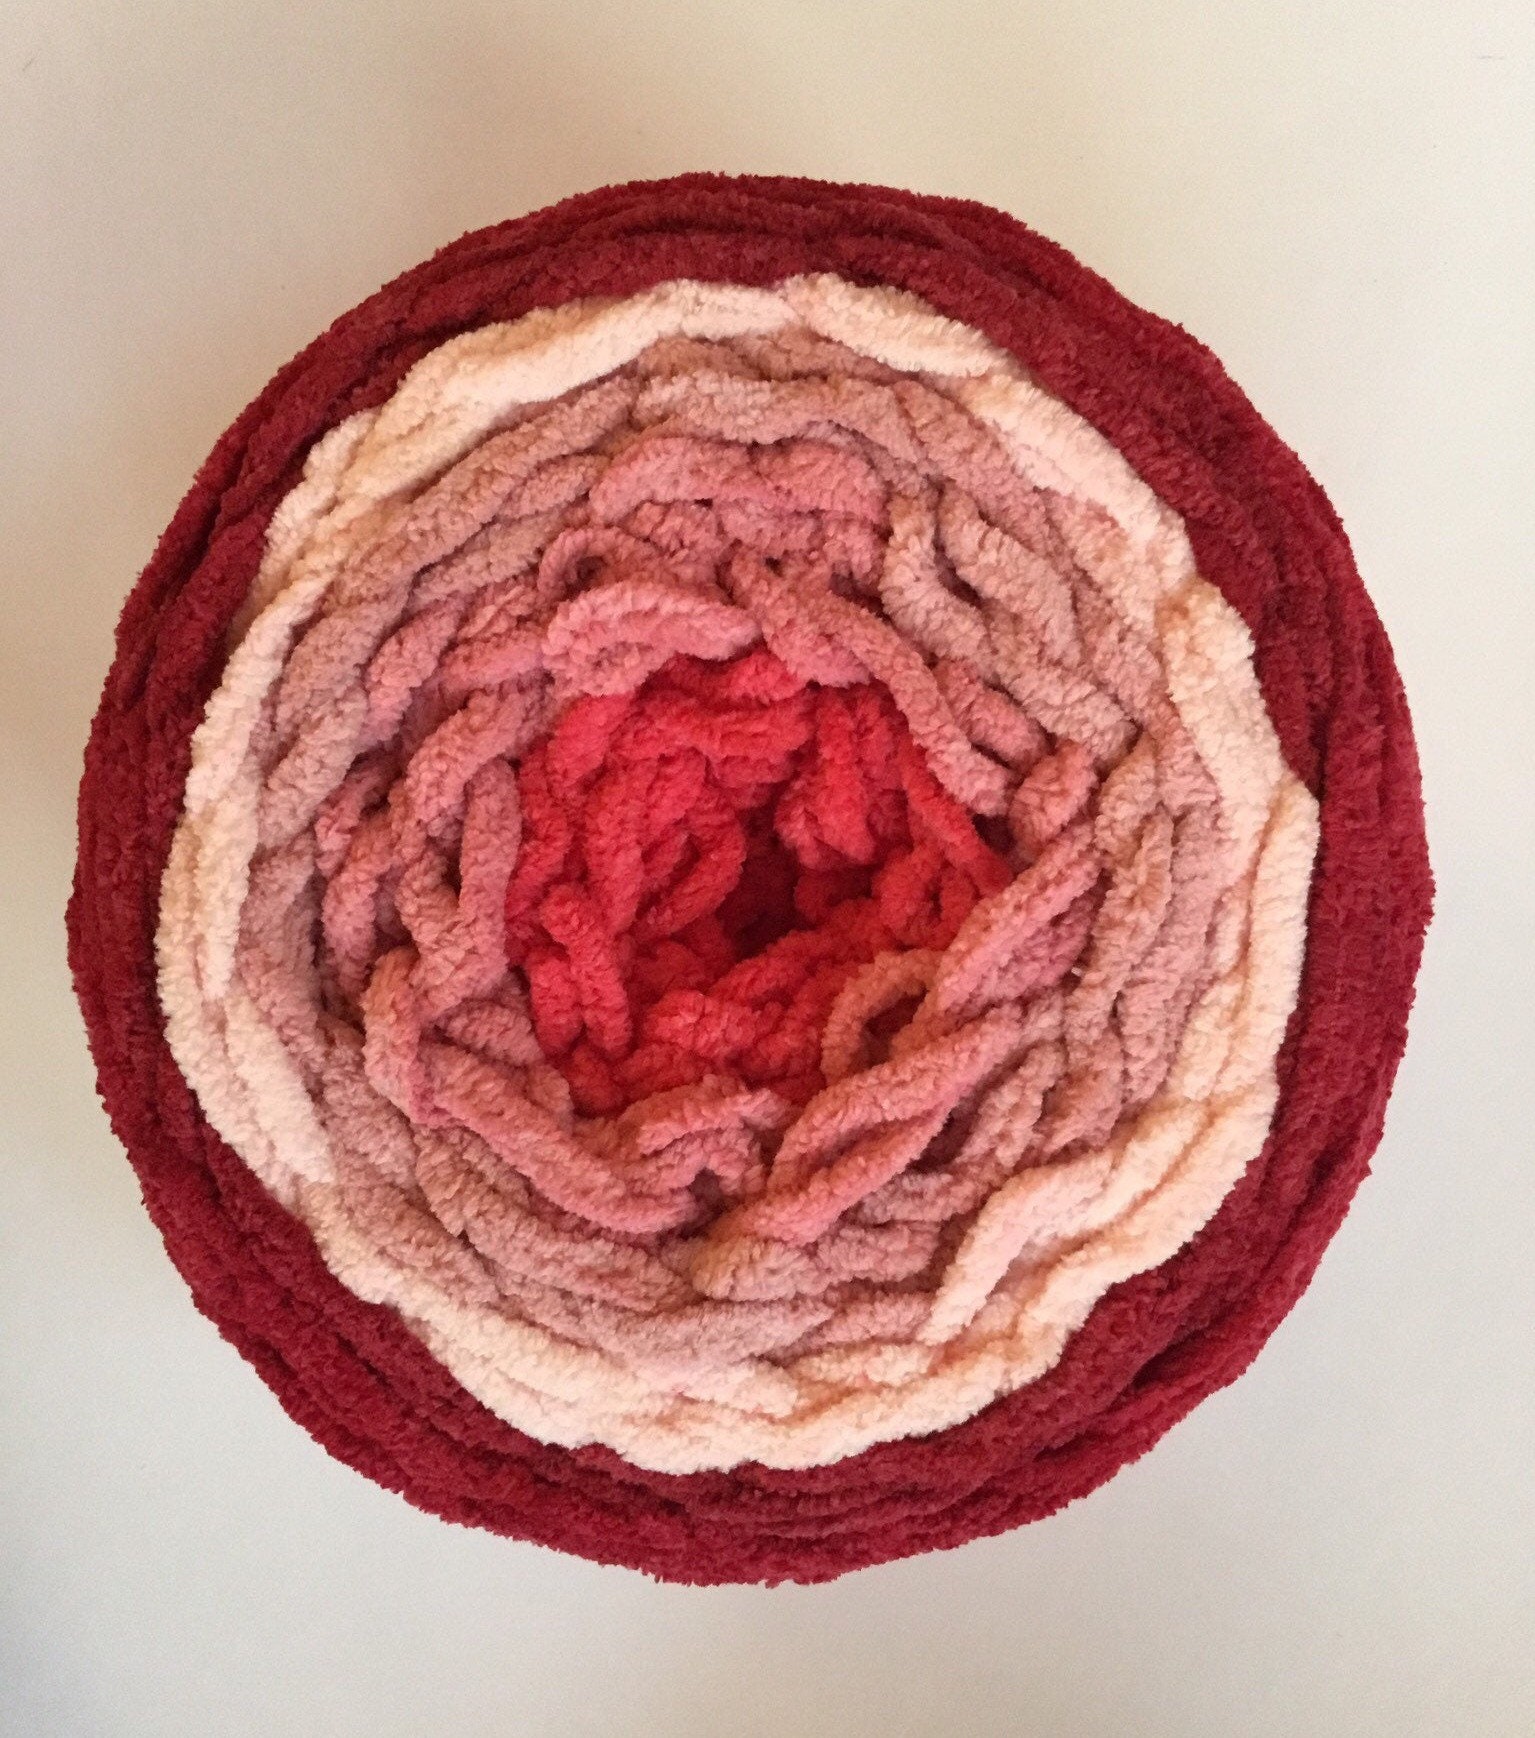 Bernat Blanket Ombre Dusty Rose Ombre Yarn - 2 Pack of 300g/10.5oz